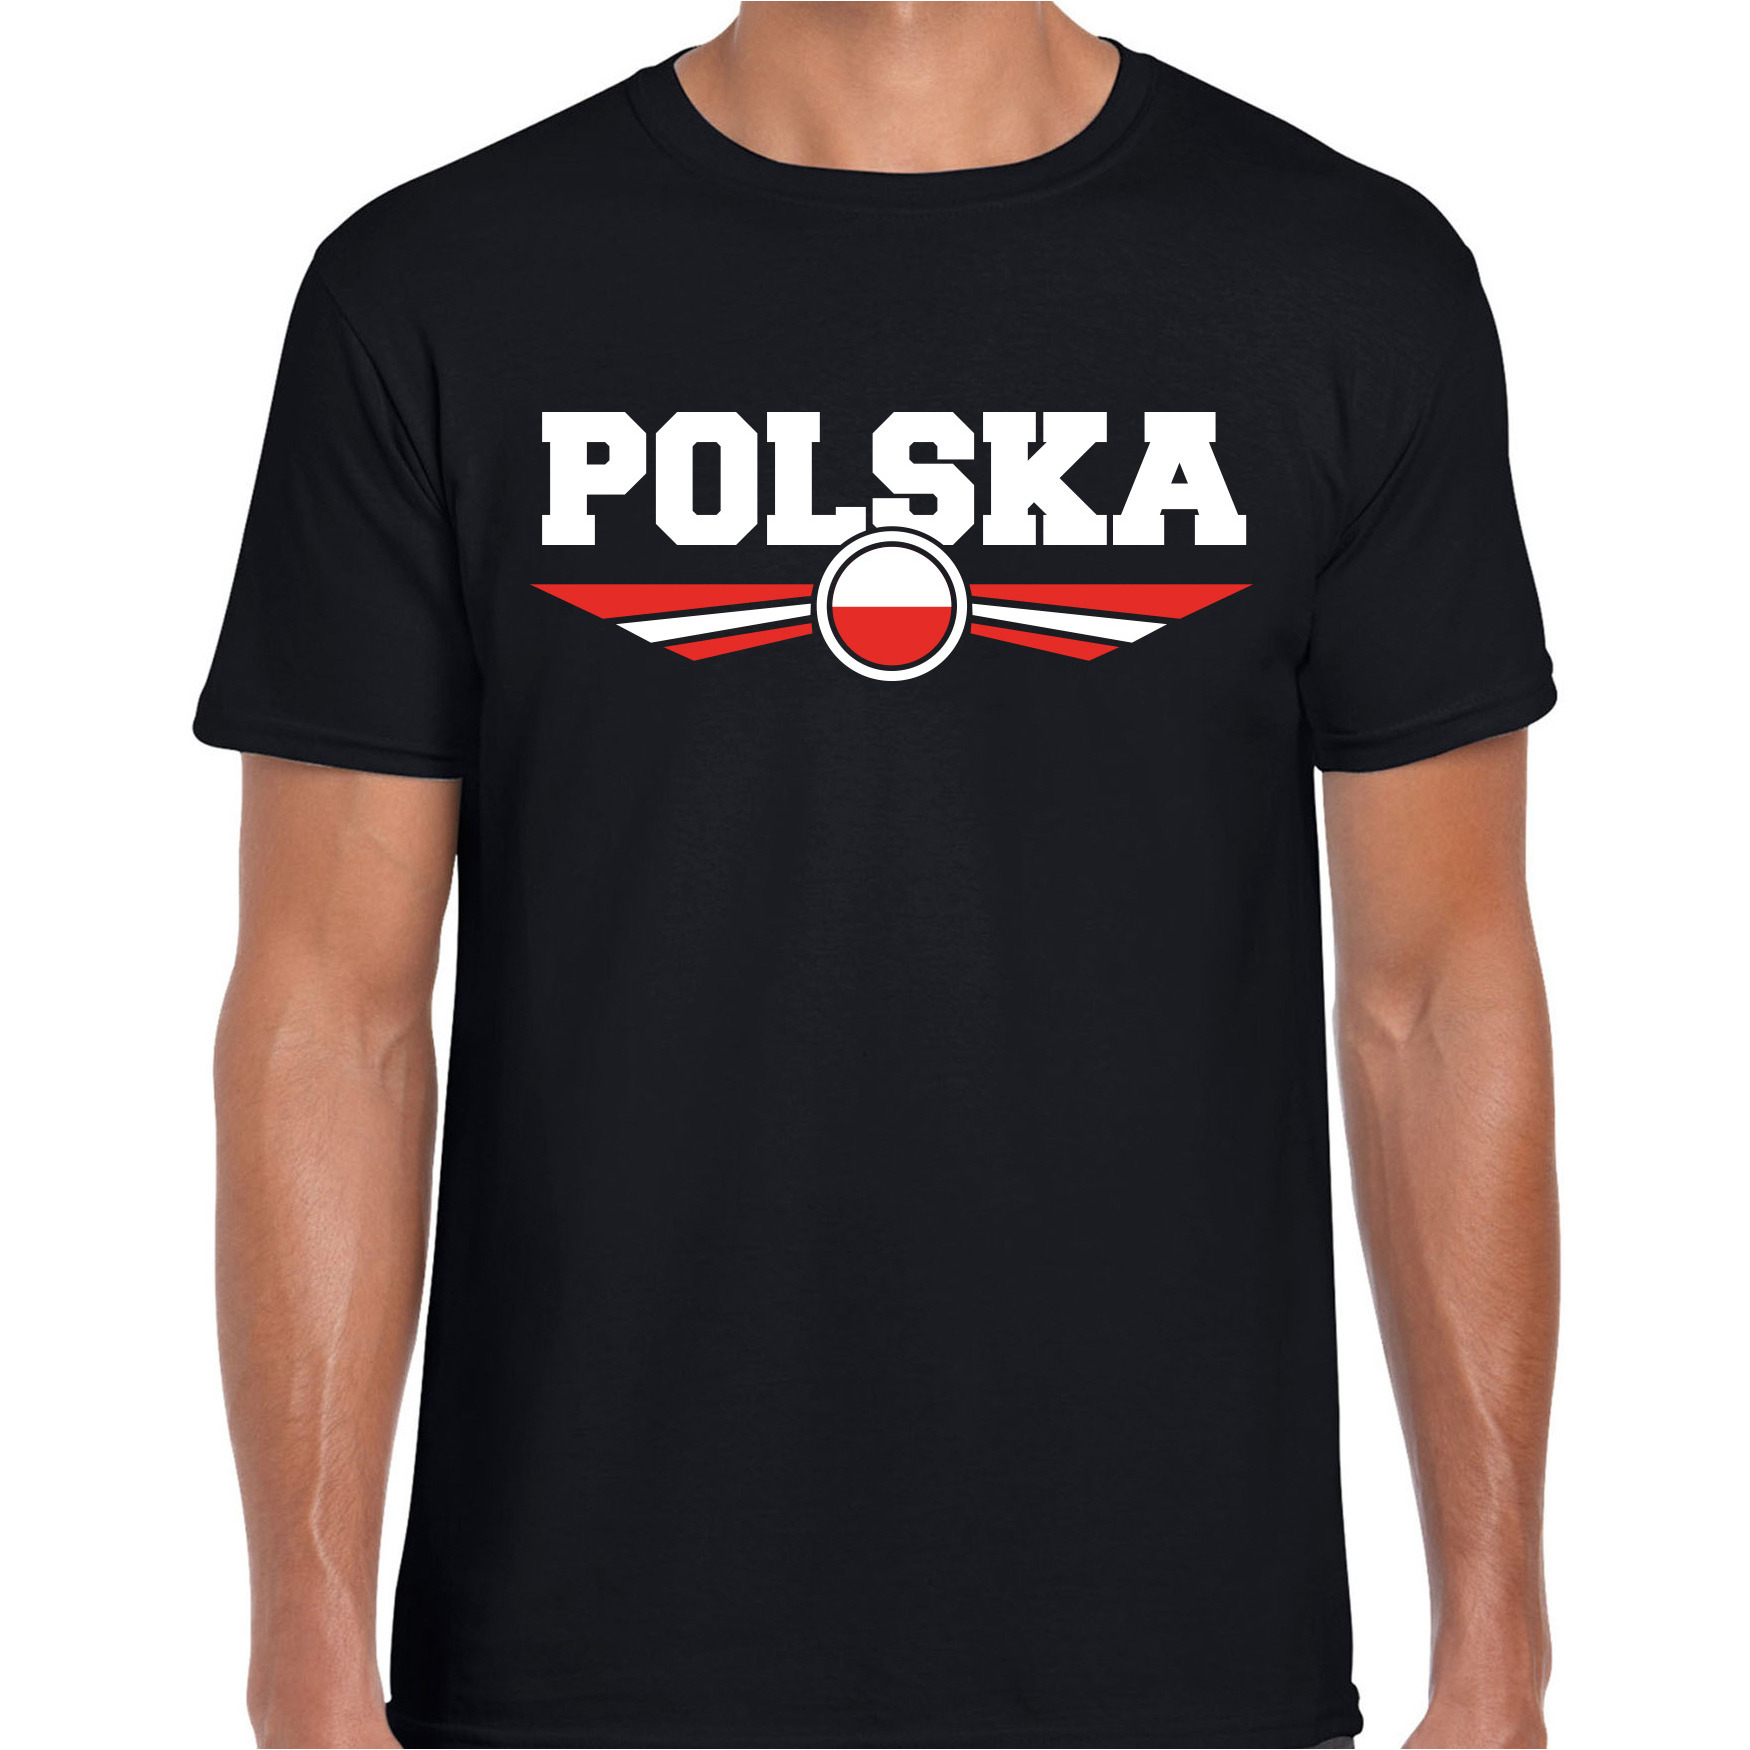 Polen-Polska landen t-shirt zwart heren